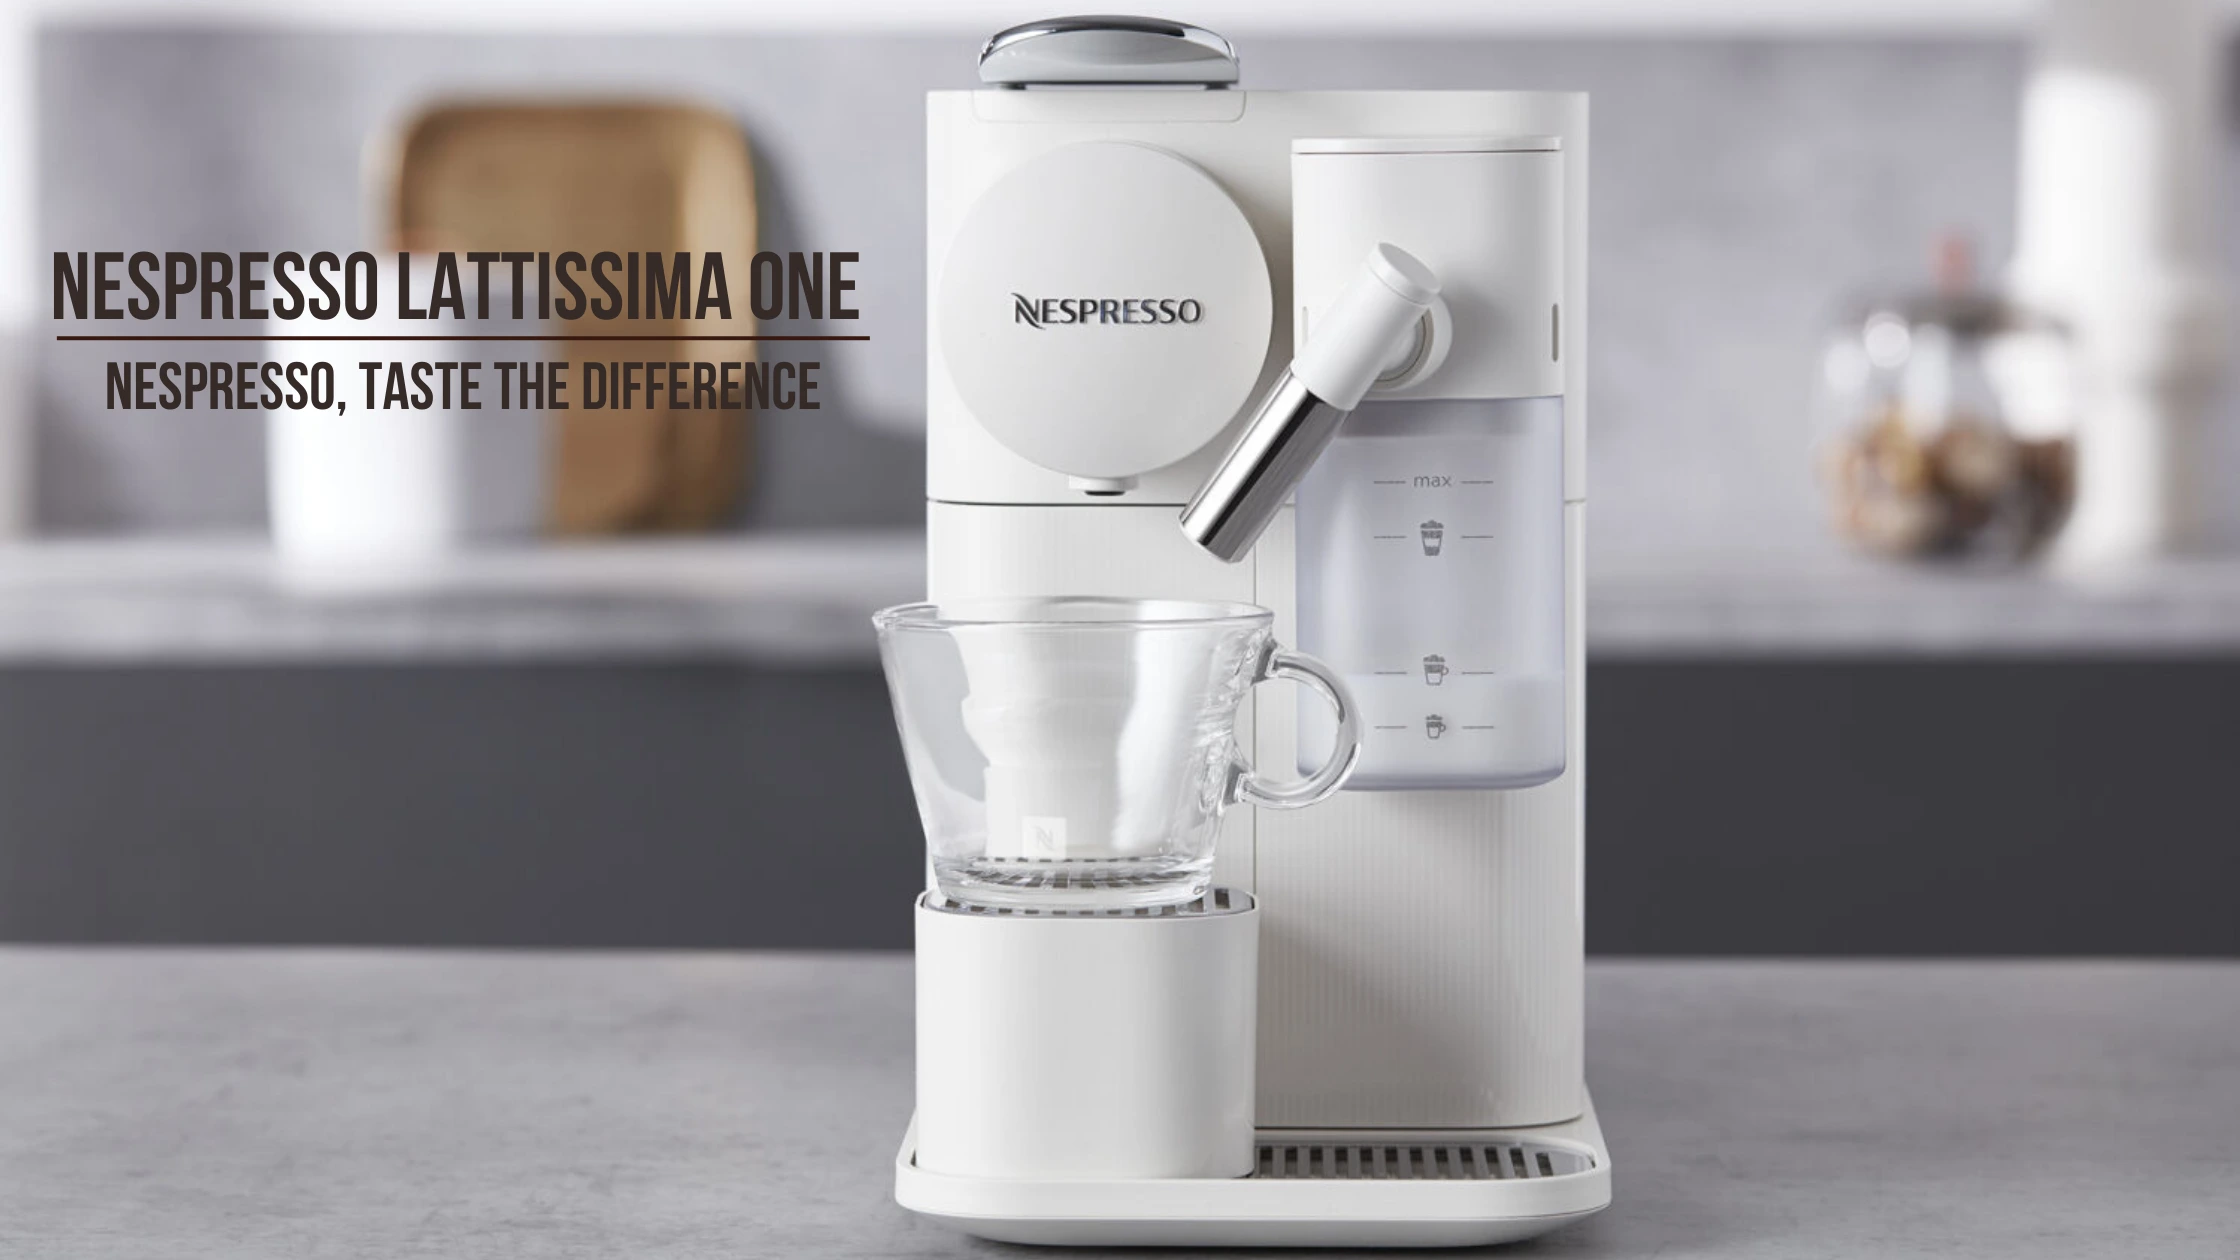 Nespresso Inissia Coffee Machine, Red, Nespresso warranty, over 200 sold